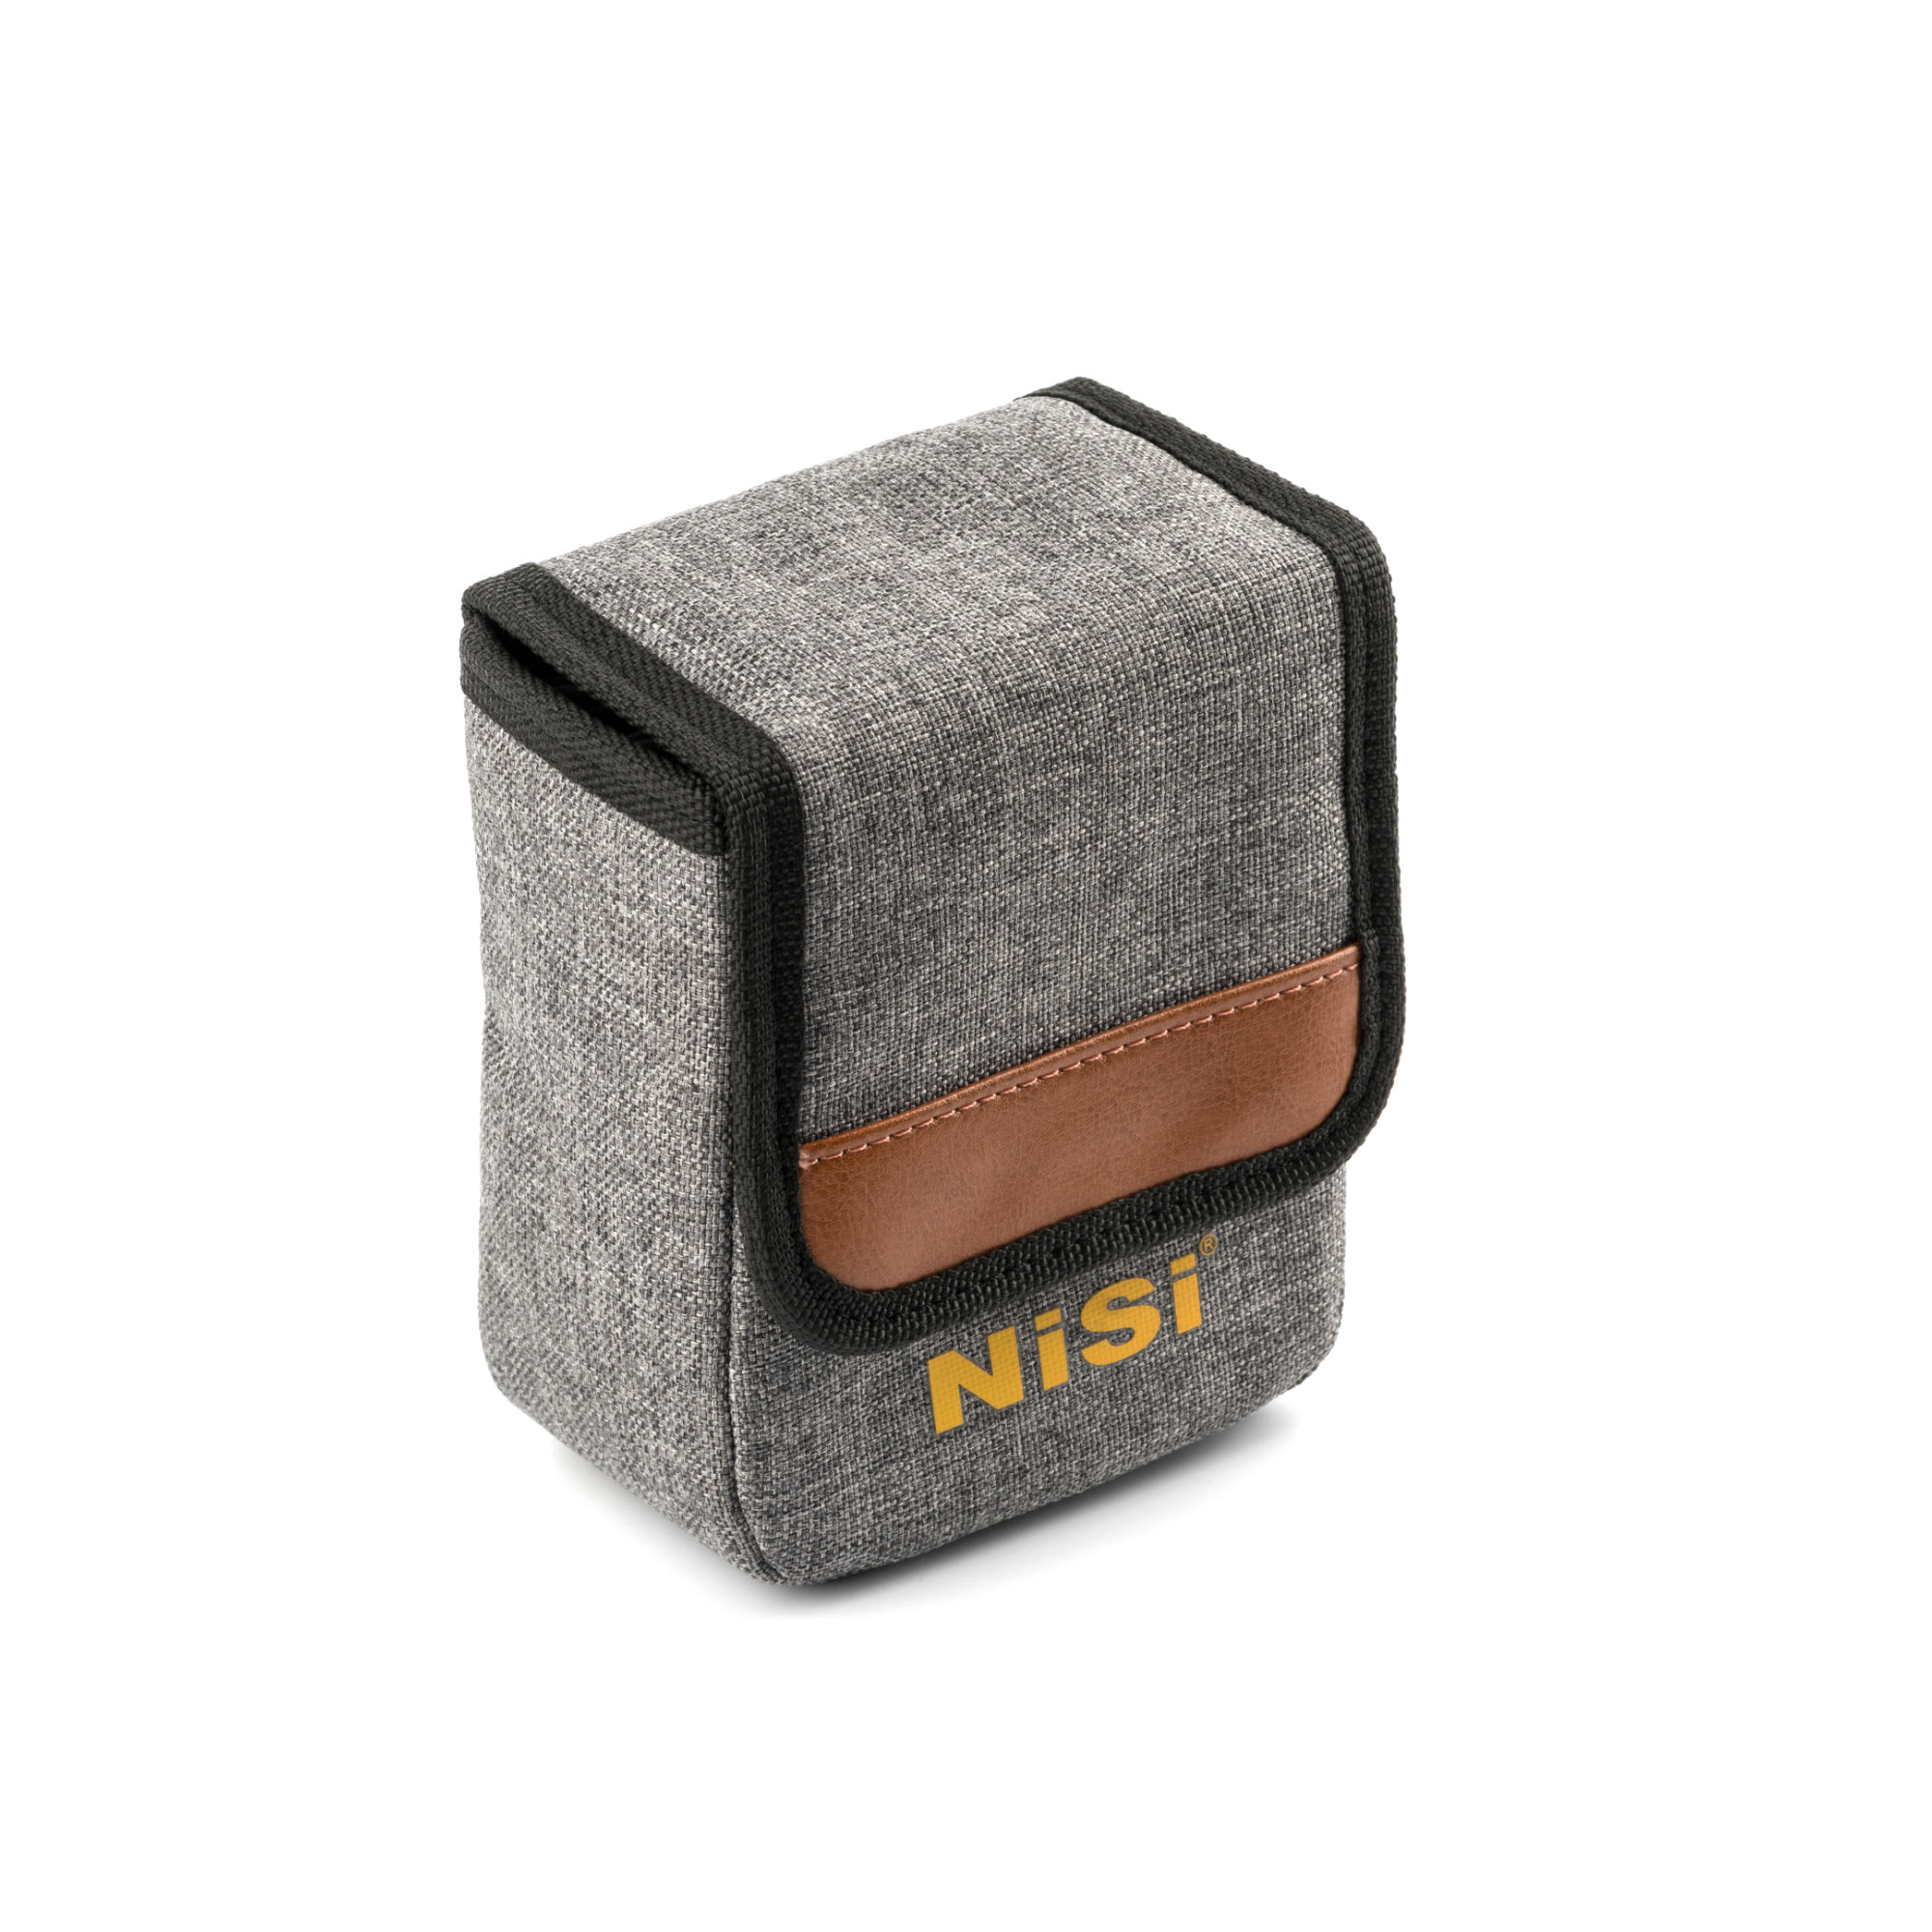 3 filtros Nisi ® m75 mm Starter Kit m75 soporte Pro CPL 